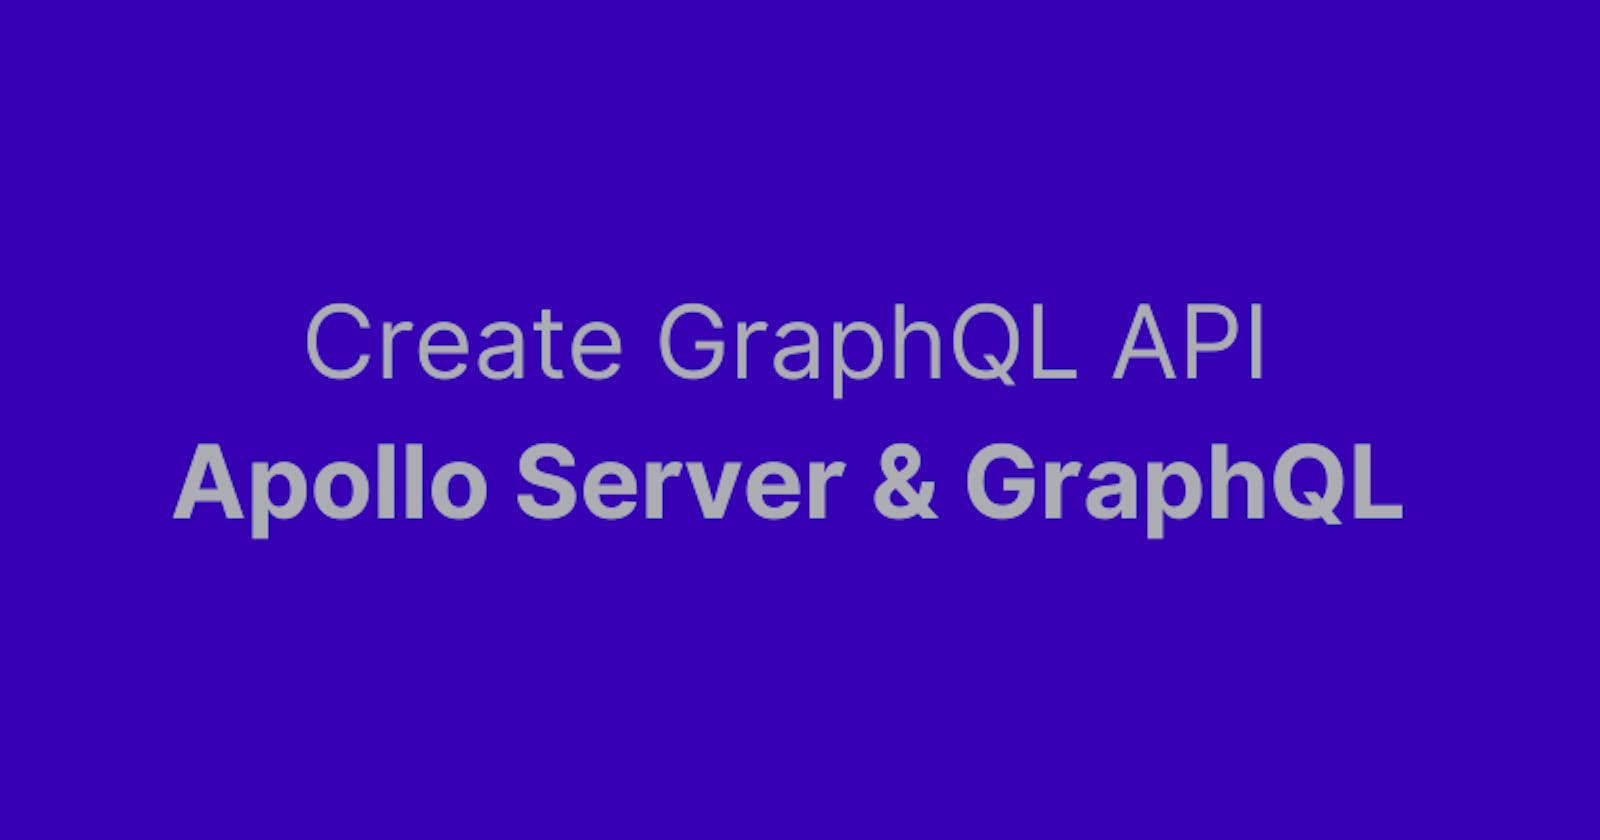 How to Install Apollo Server and GraphQL?